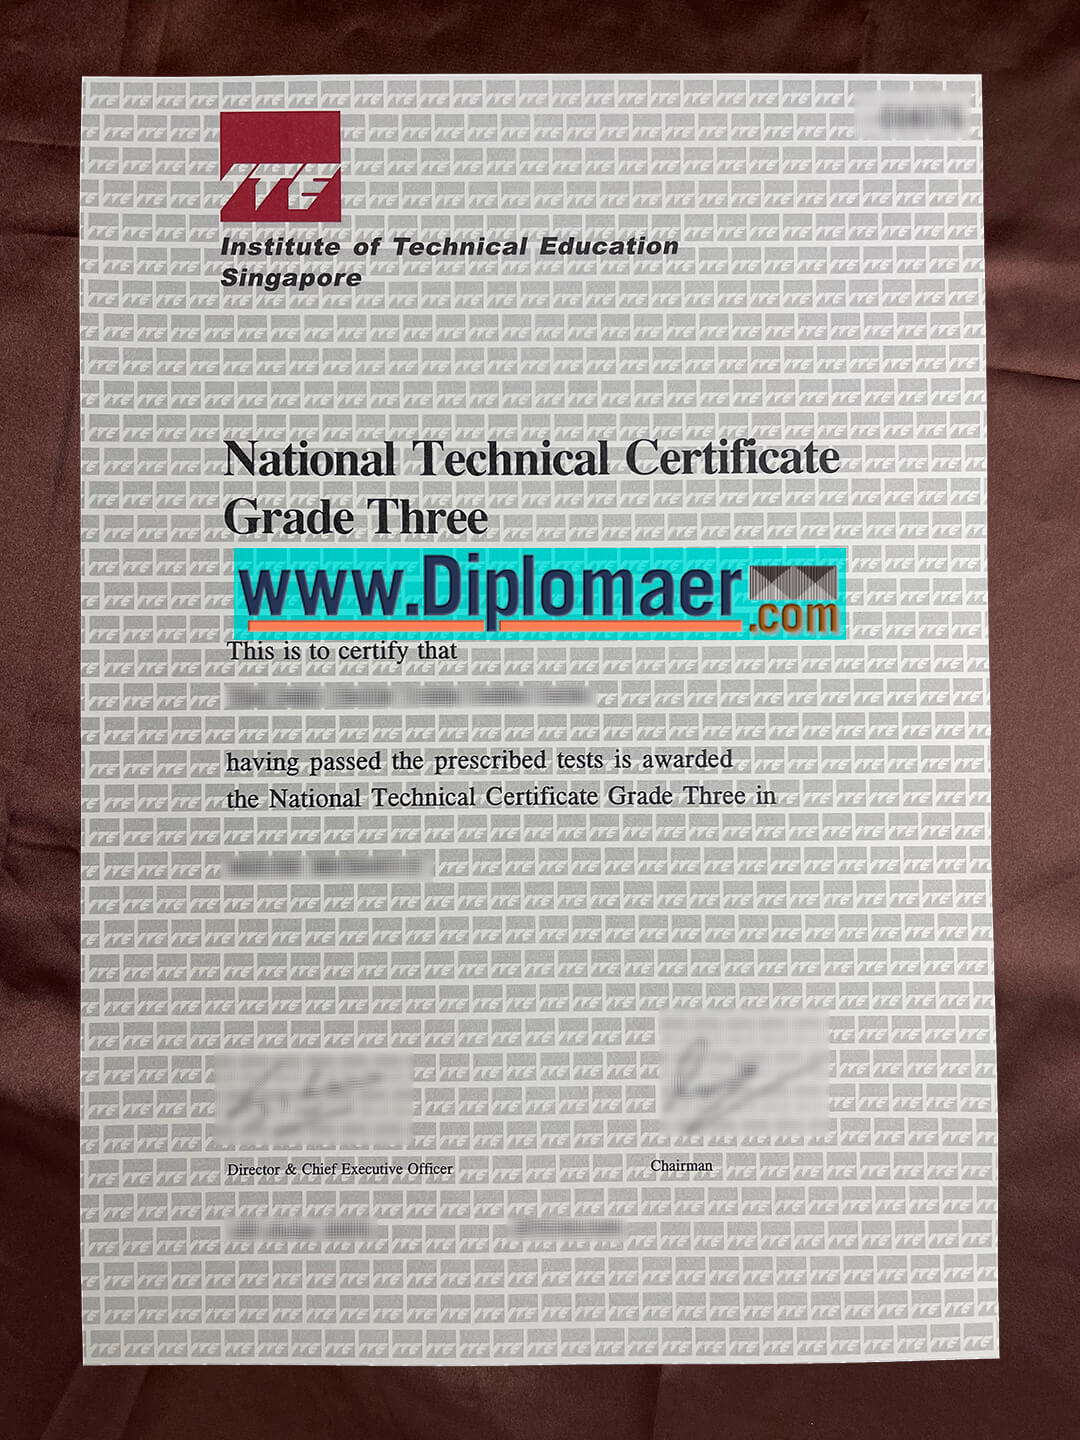 ITE Fake Diploma - Fake ITE Singapore Diploma, How to buy ITE fake certificate?